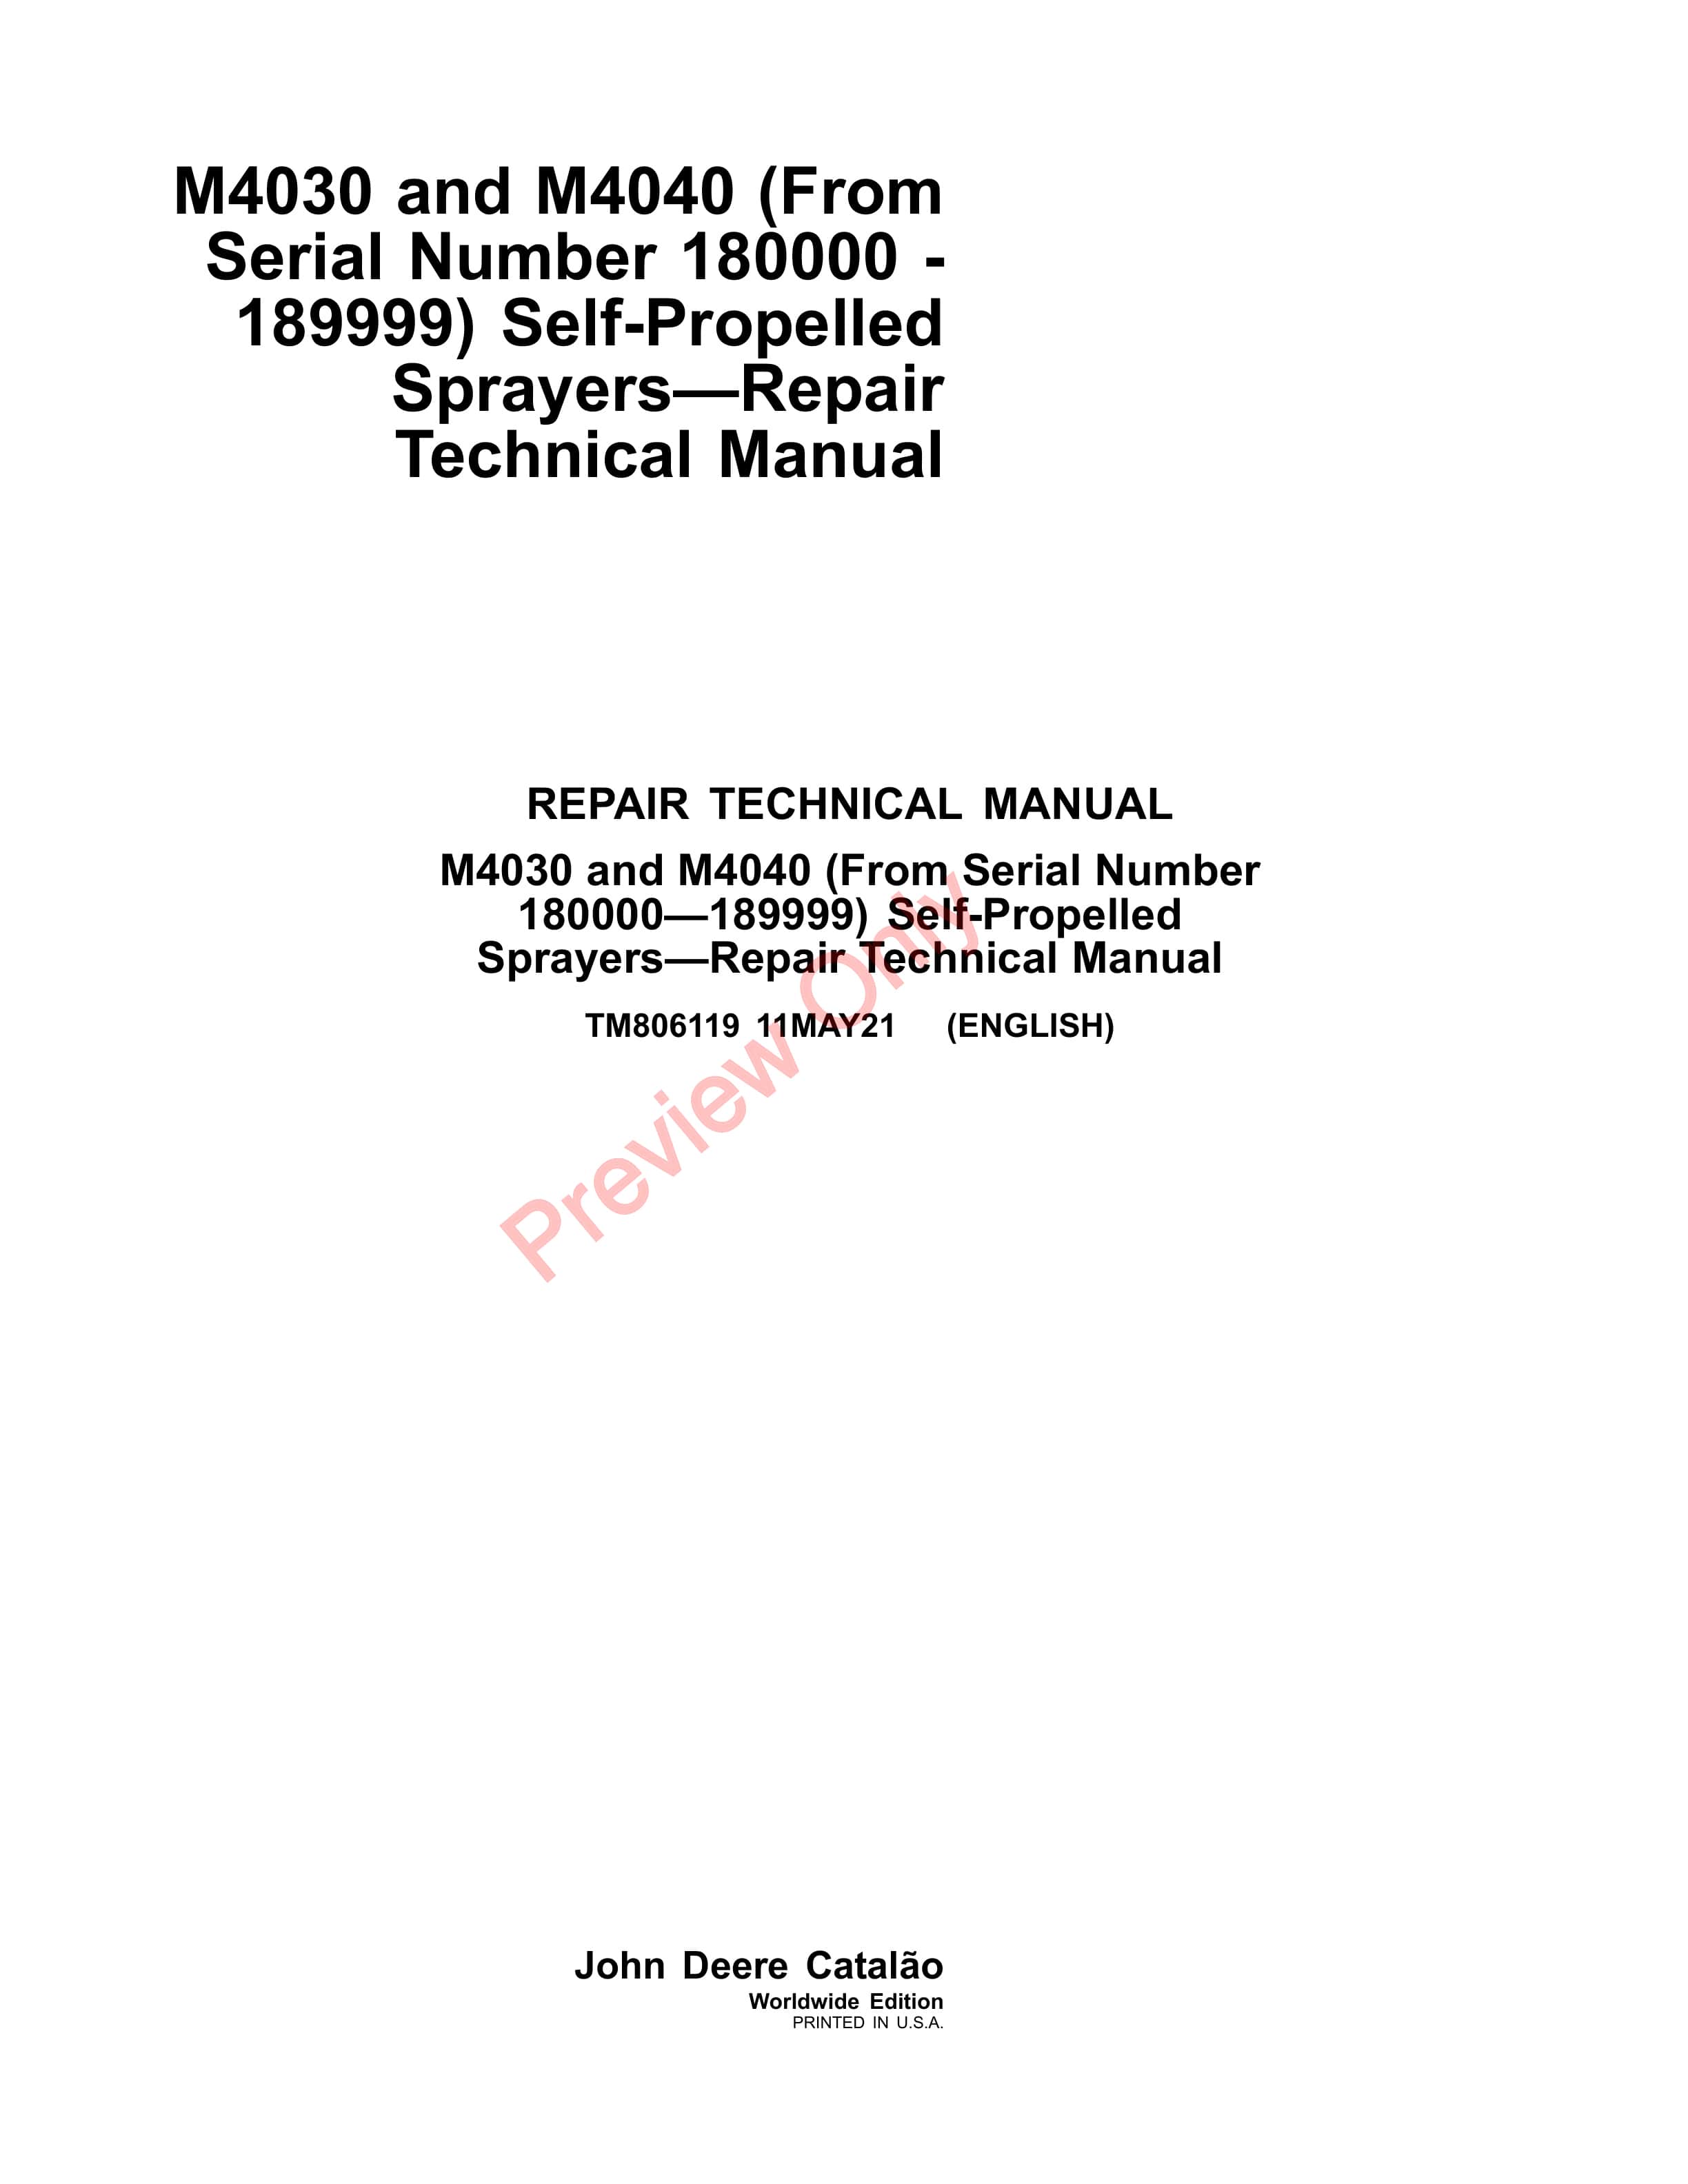 John Deere M4030 and M4040 Self-Propelled Sprayers (180000-189999), Repair Technical Manual TM806119 11MAY21-1